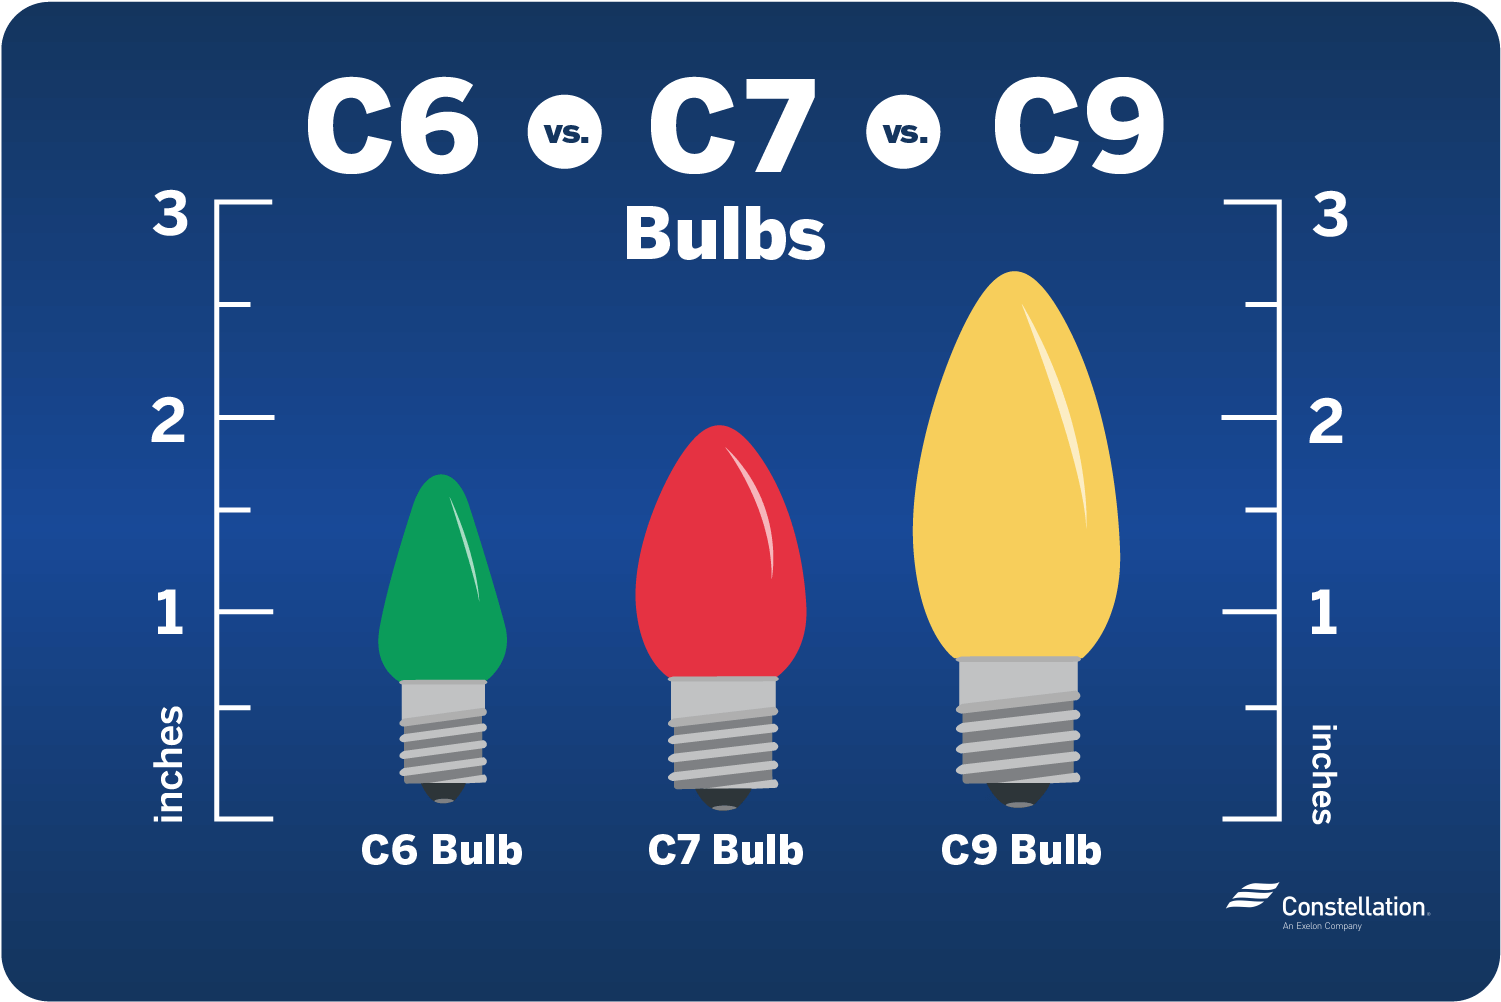 ambient light bulbs